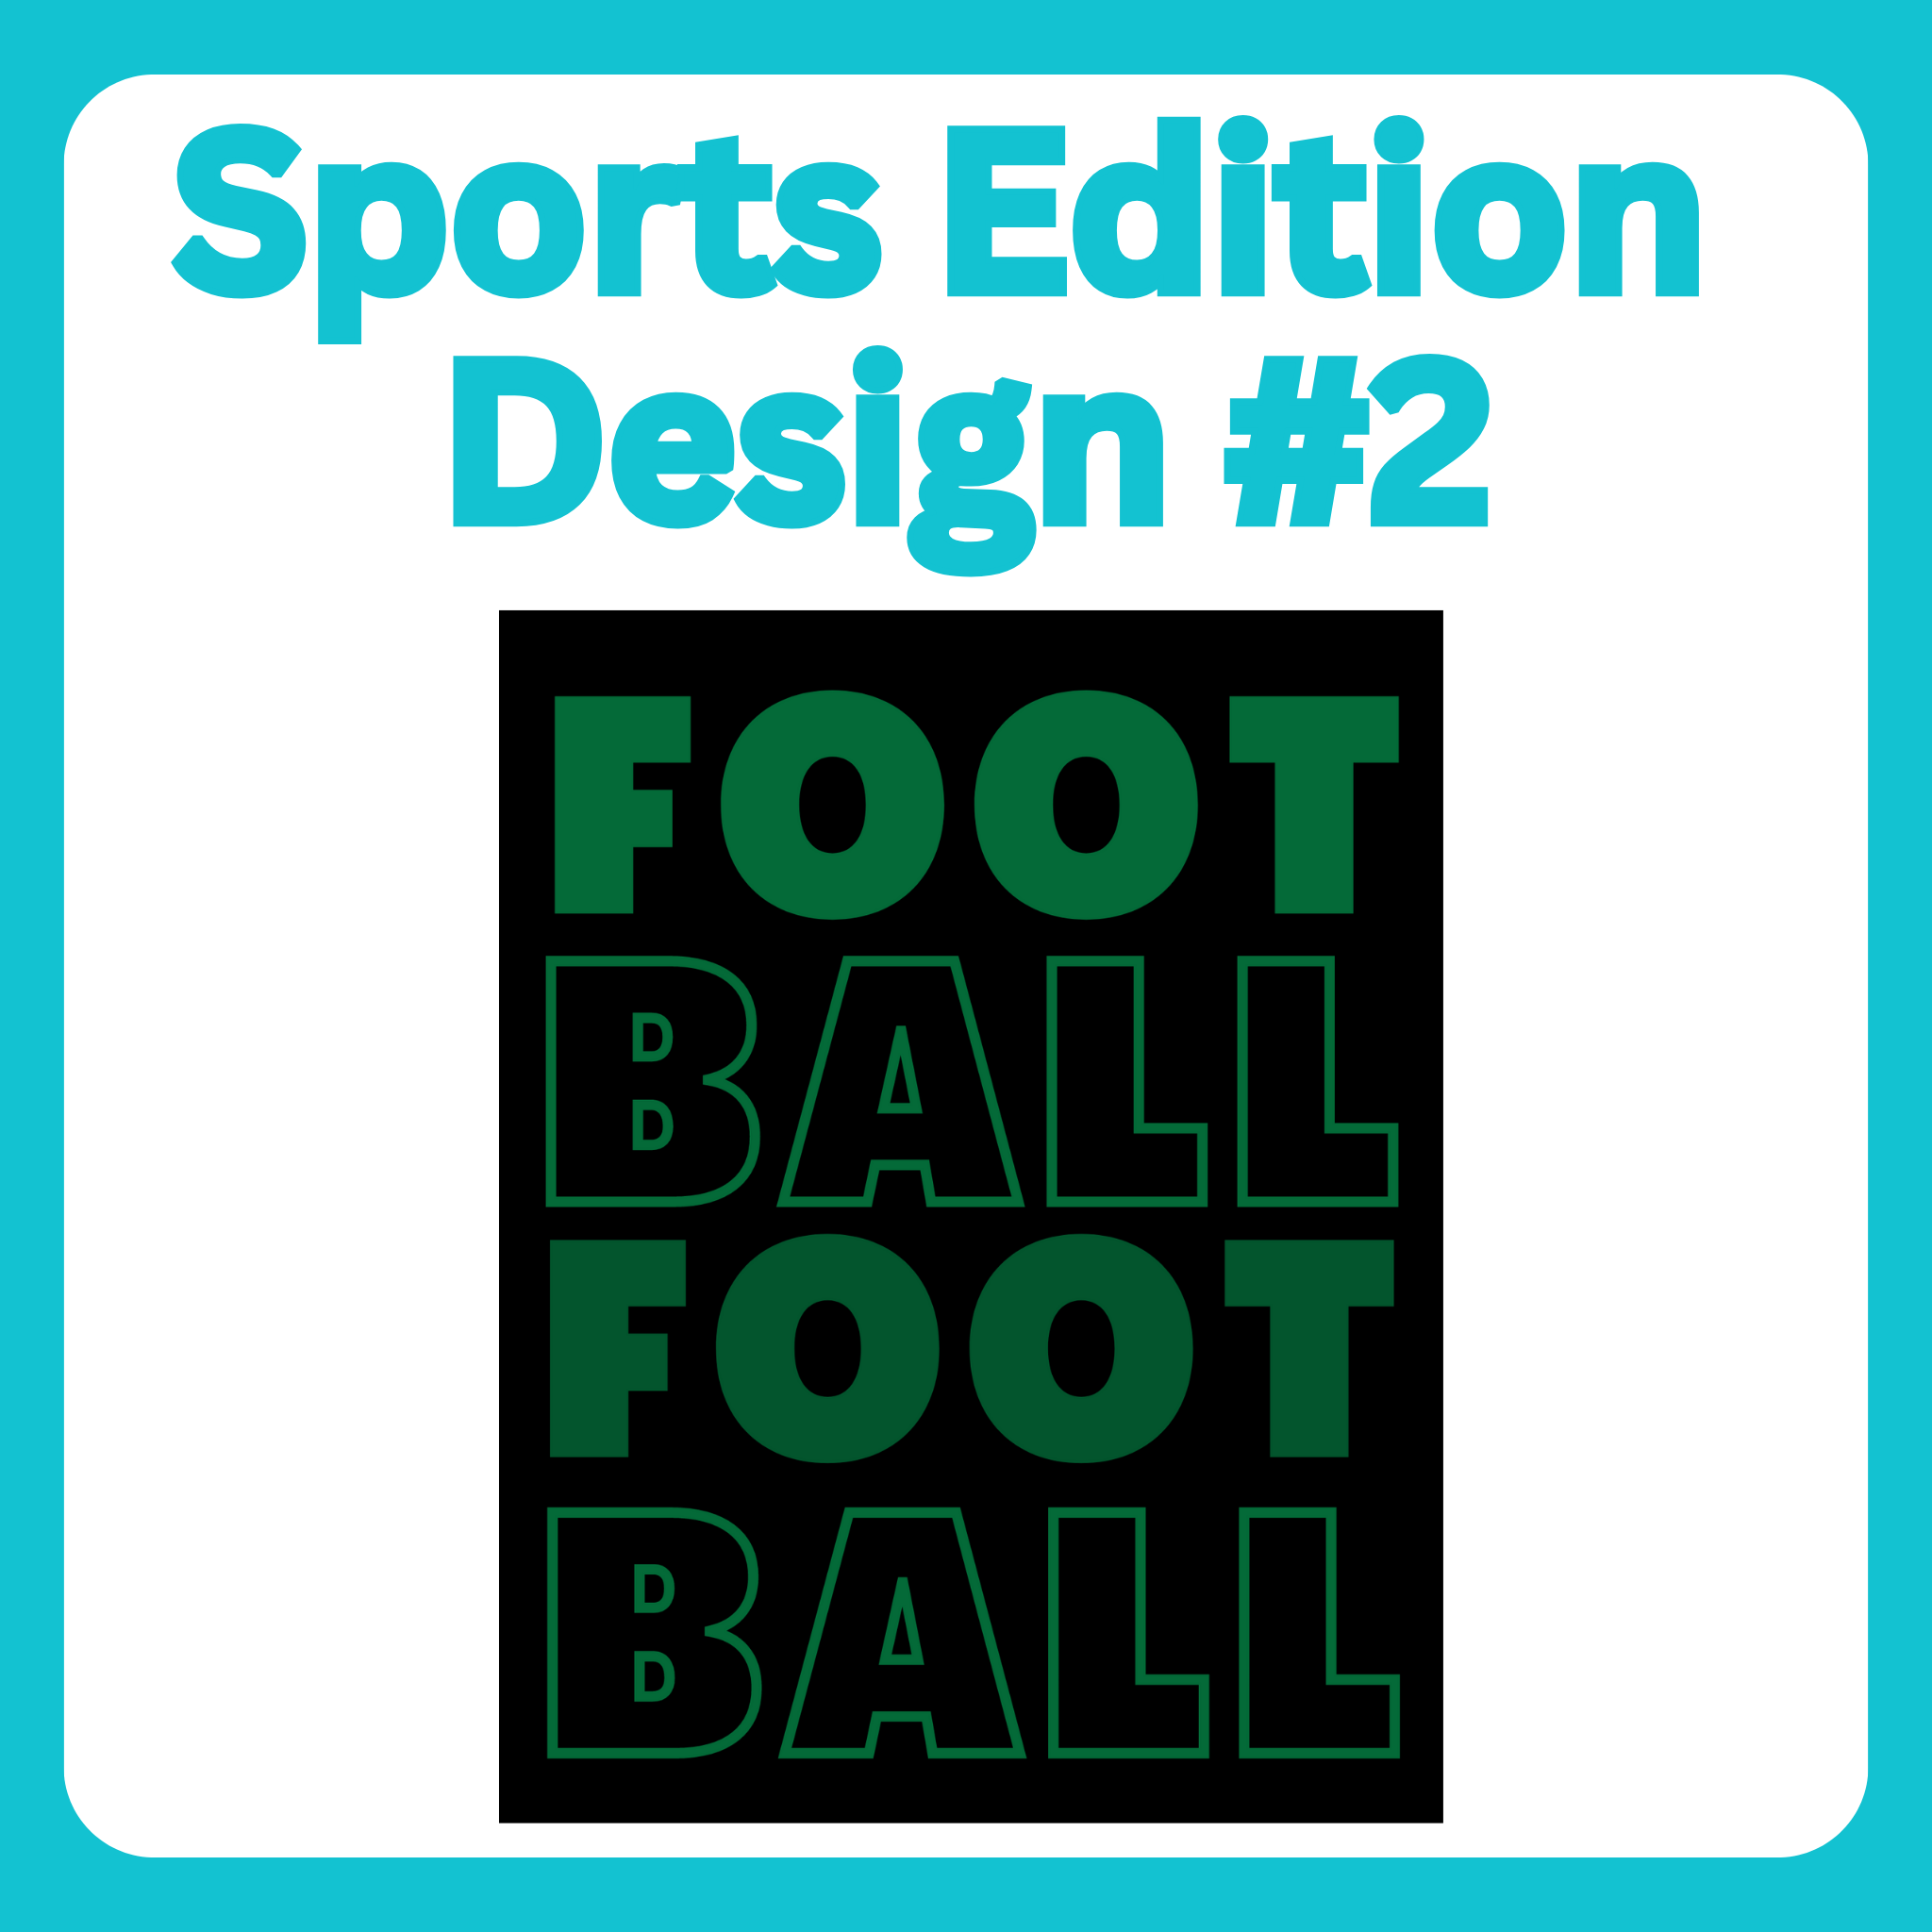 Sports Edition Design #2